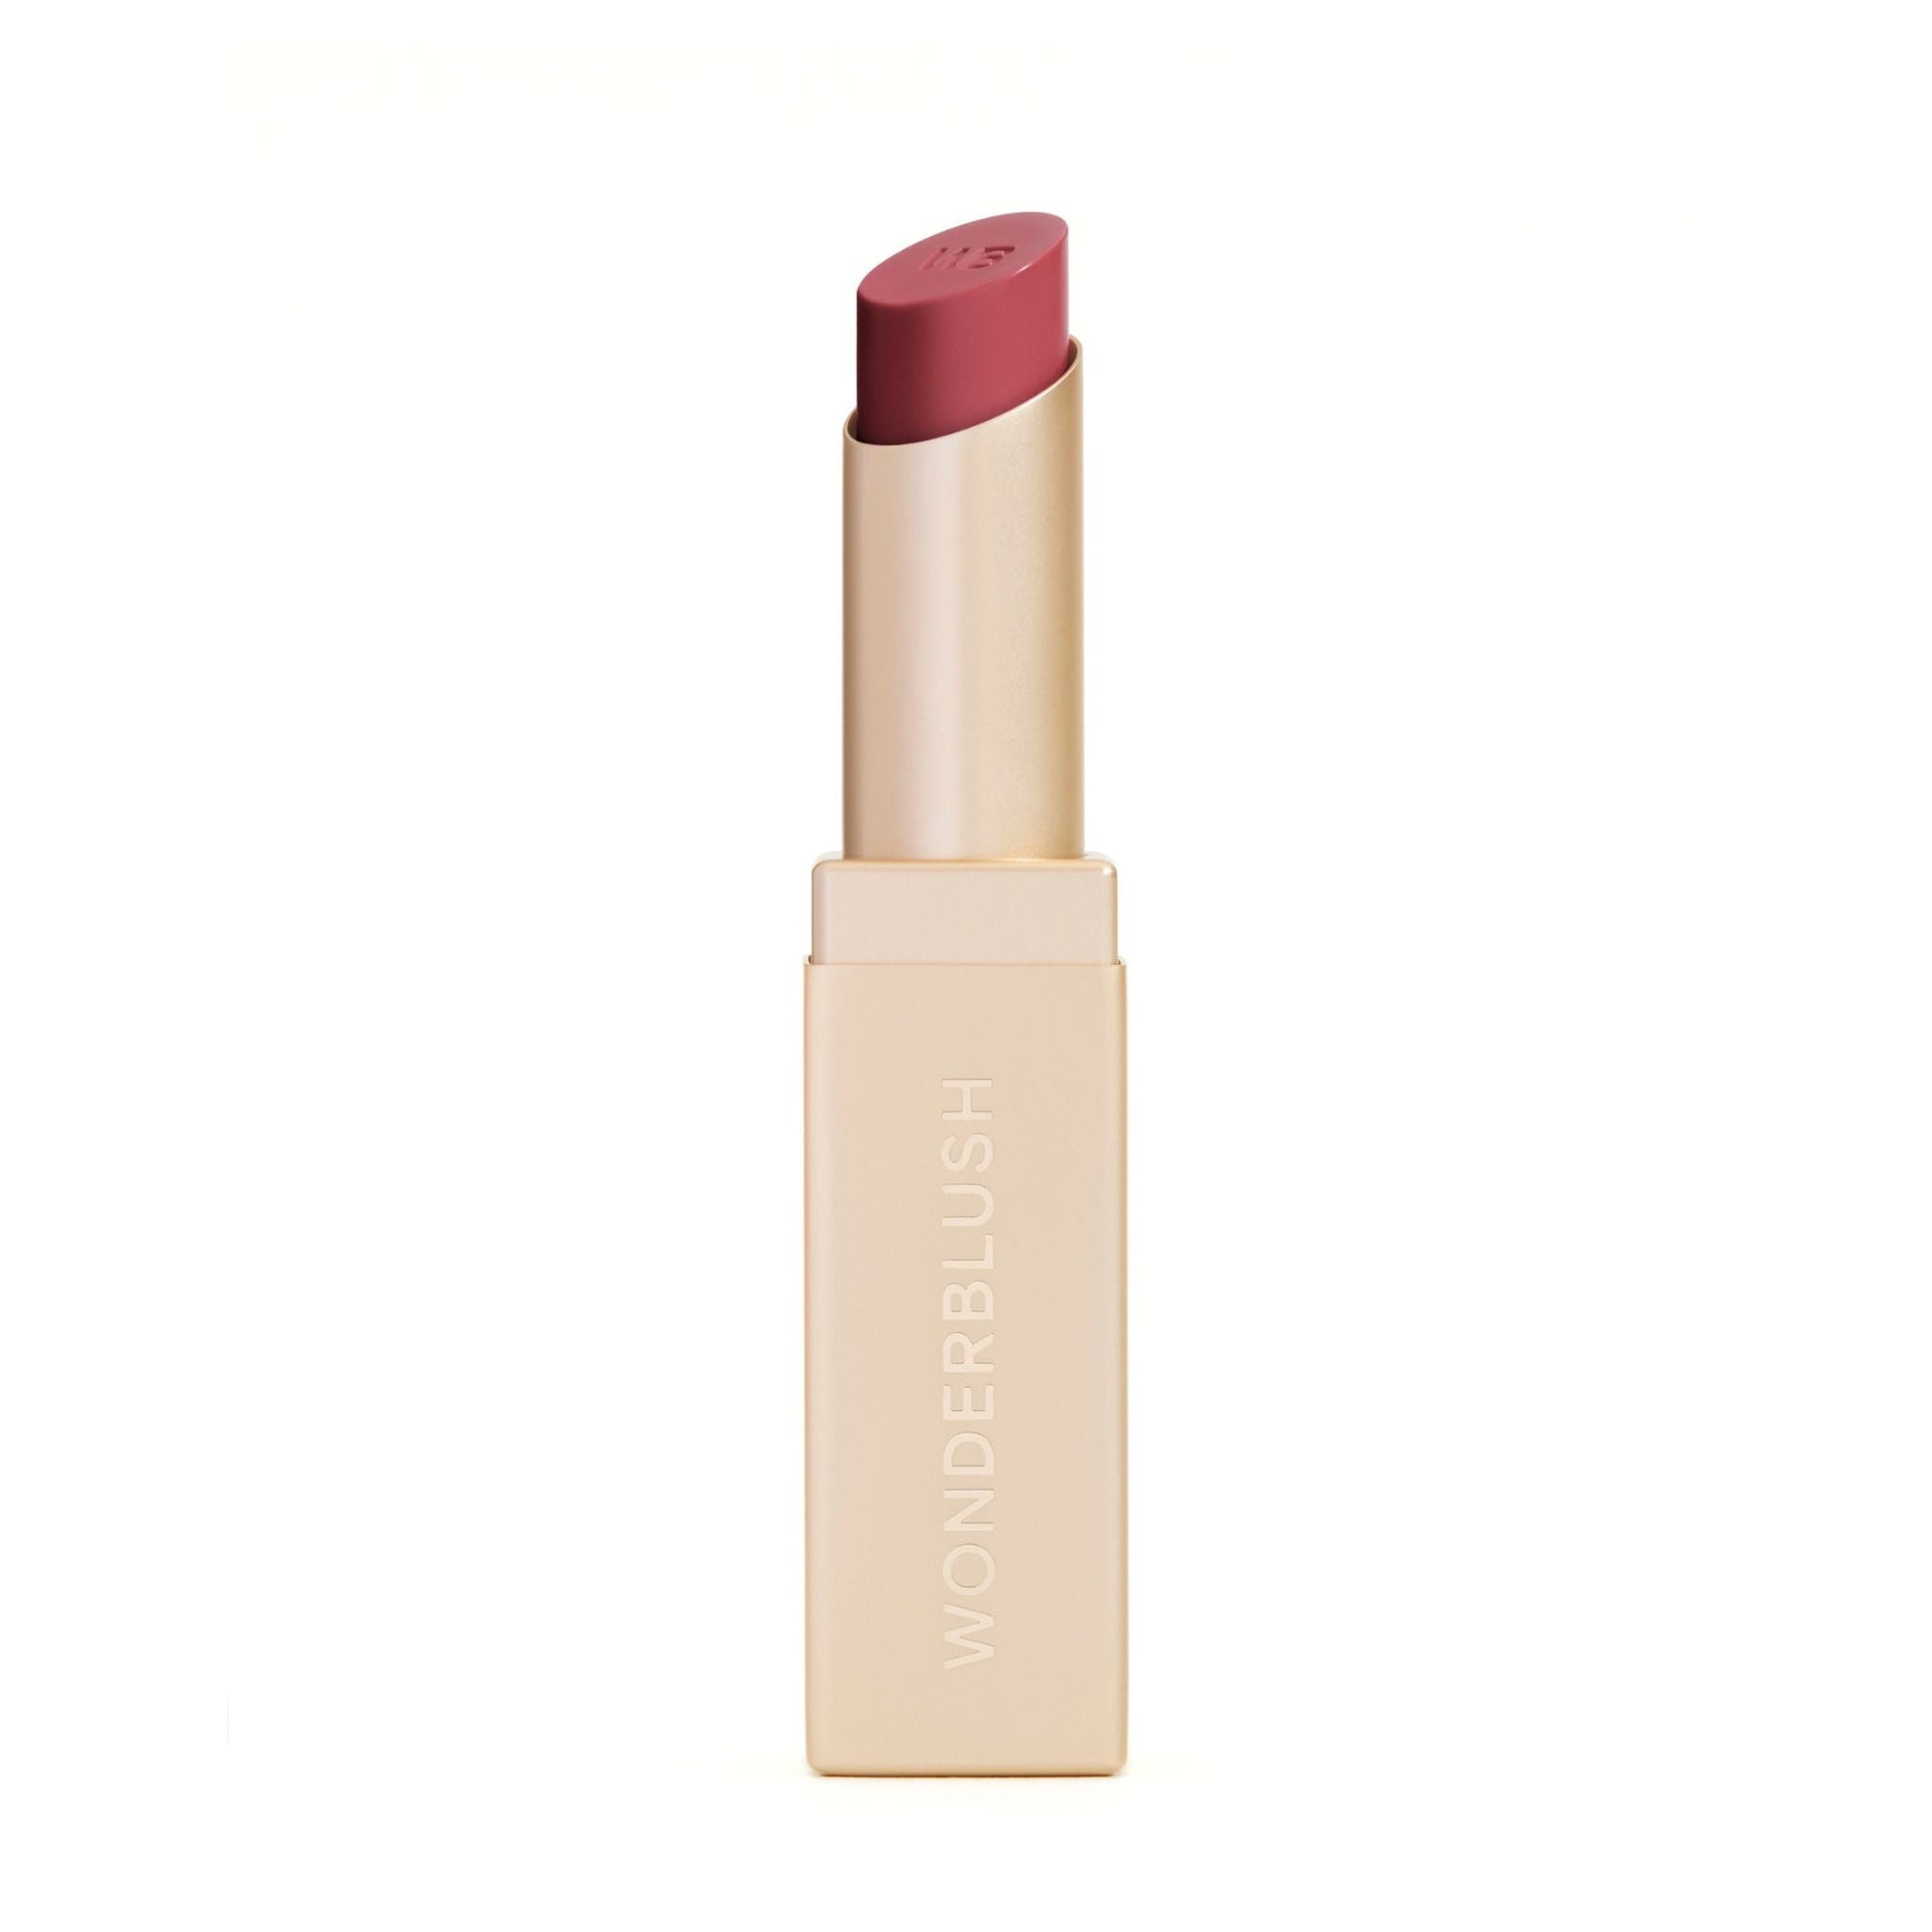 Wonderblush - Wonderblush Le Rouge Lipstick - ORESTA clean beauty simplified